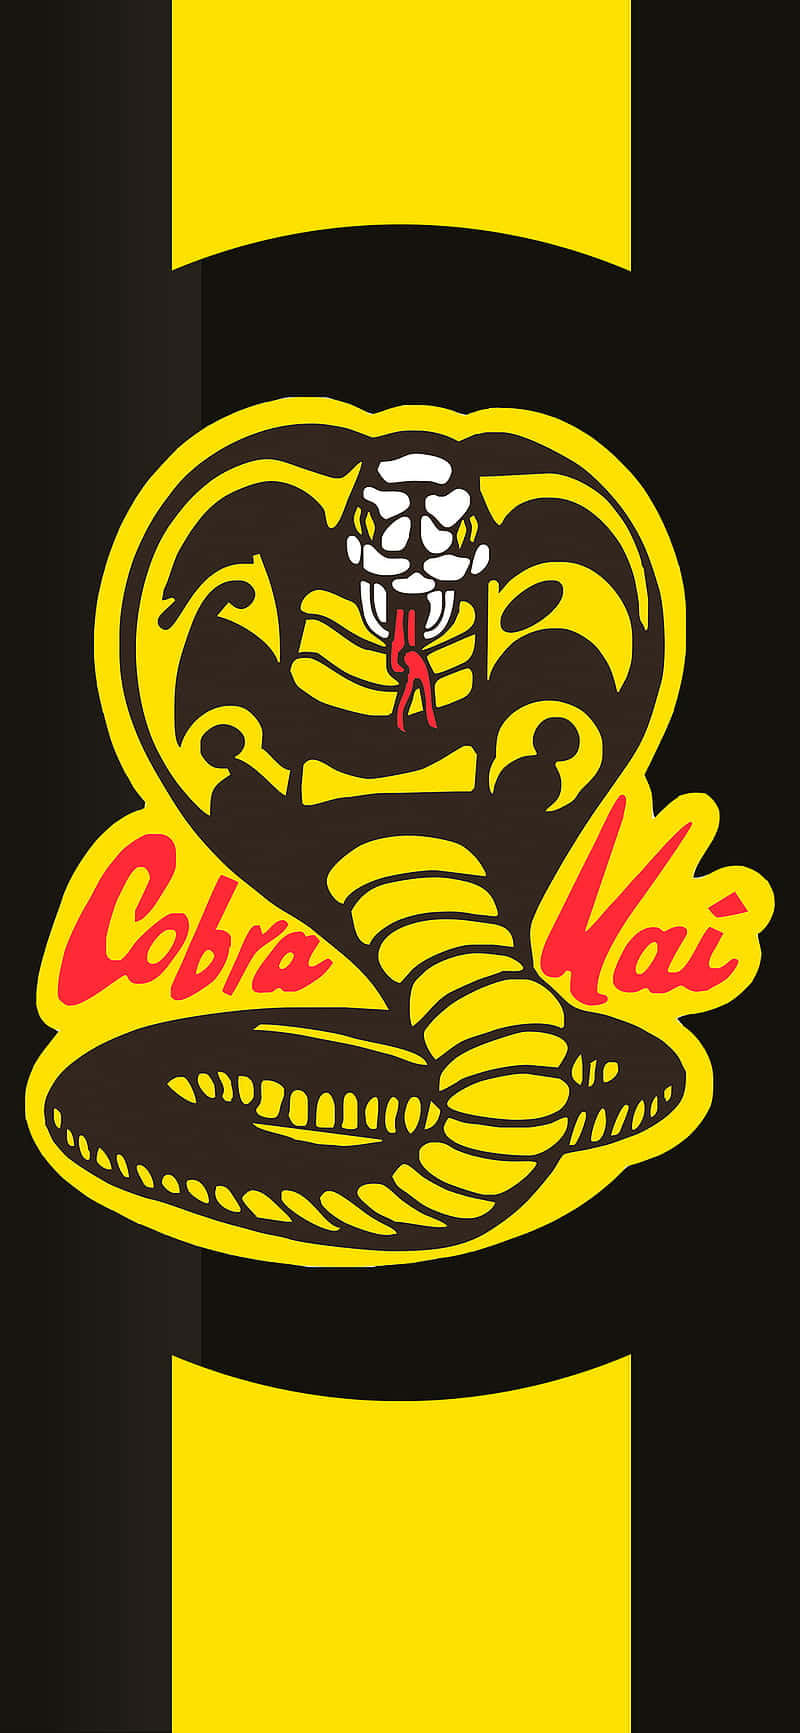 Entreguese À Luta Com O Wallpaper Cobra Kai Para Iphone Xr.